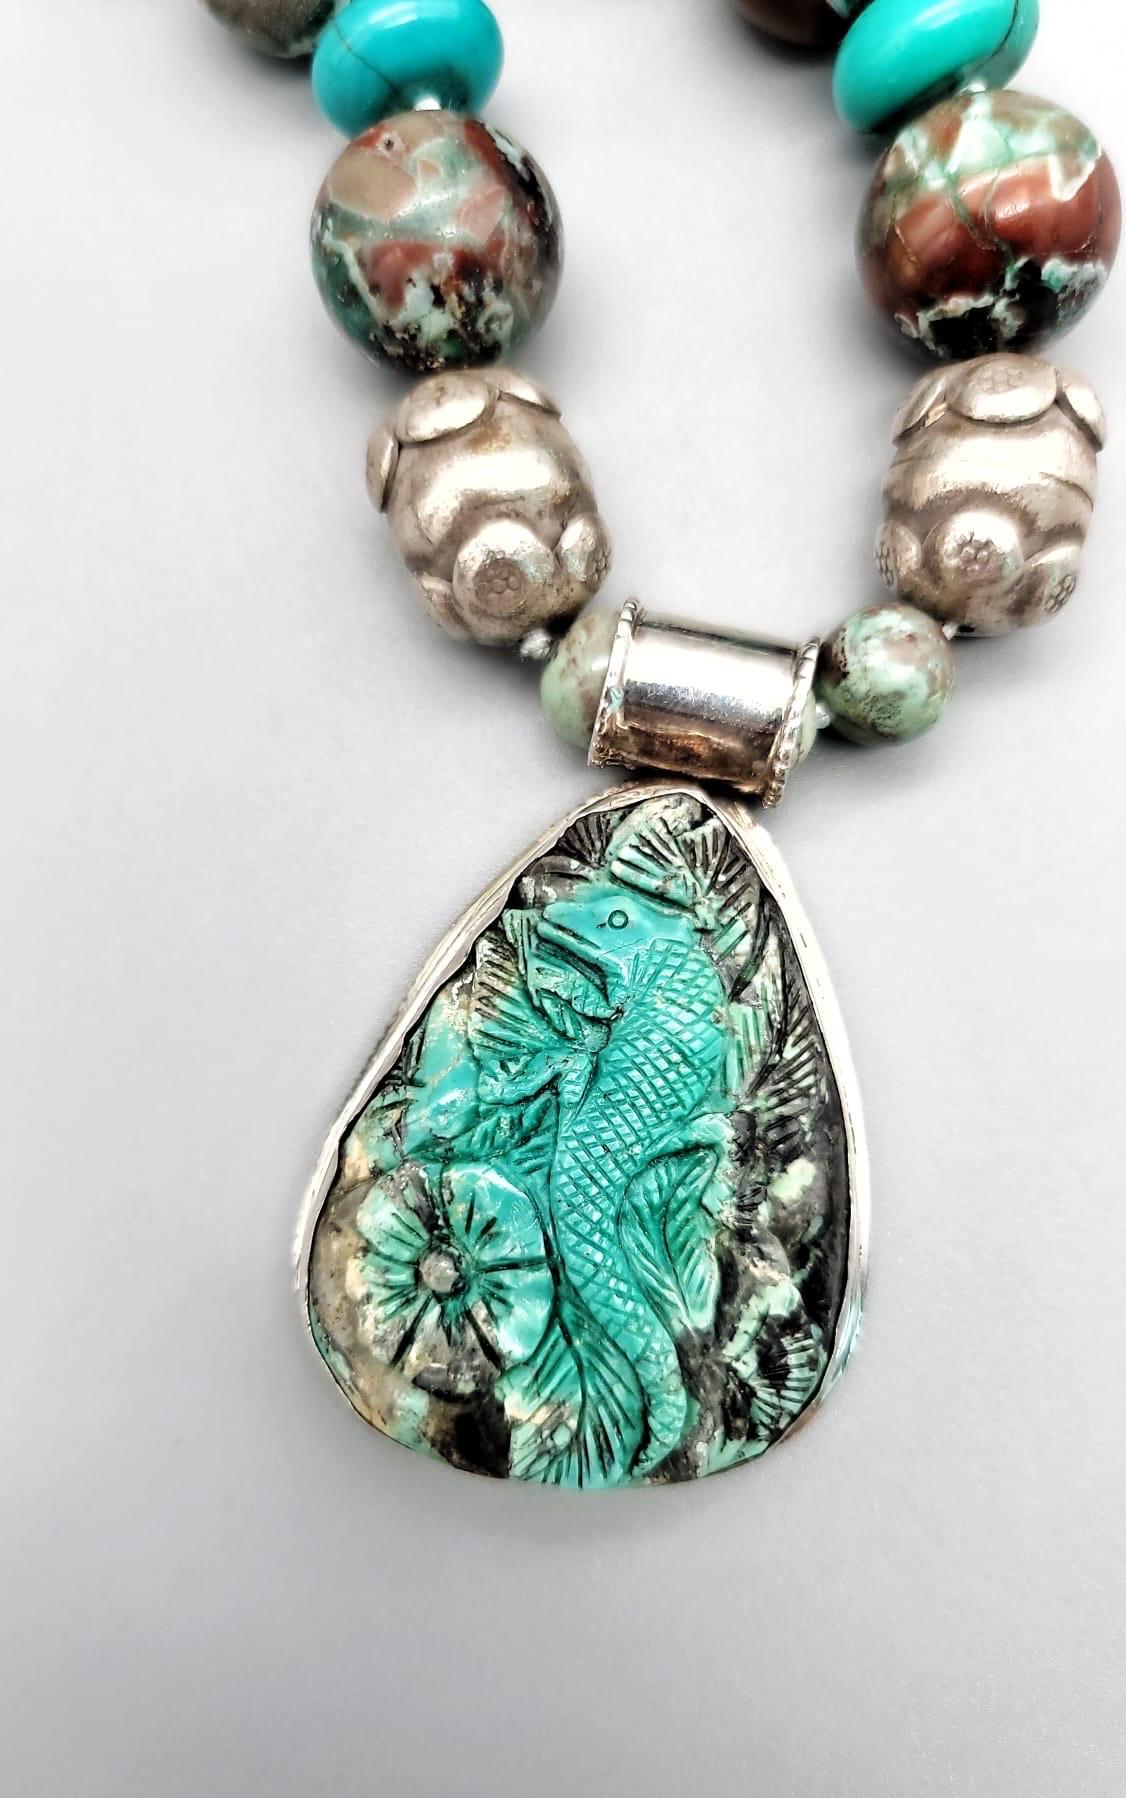 A.Jeschel  Turquoise Necklace Carved lizard pendant  7